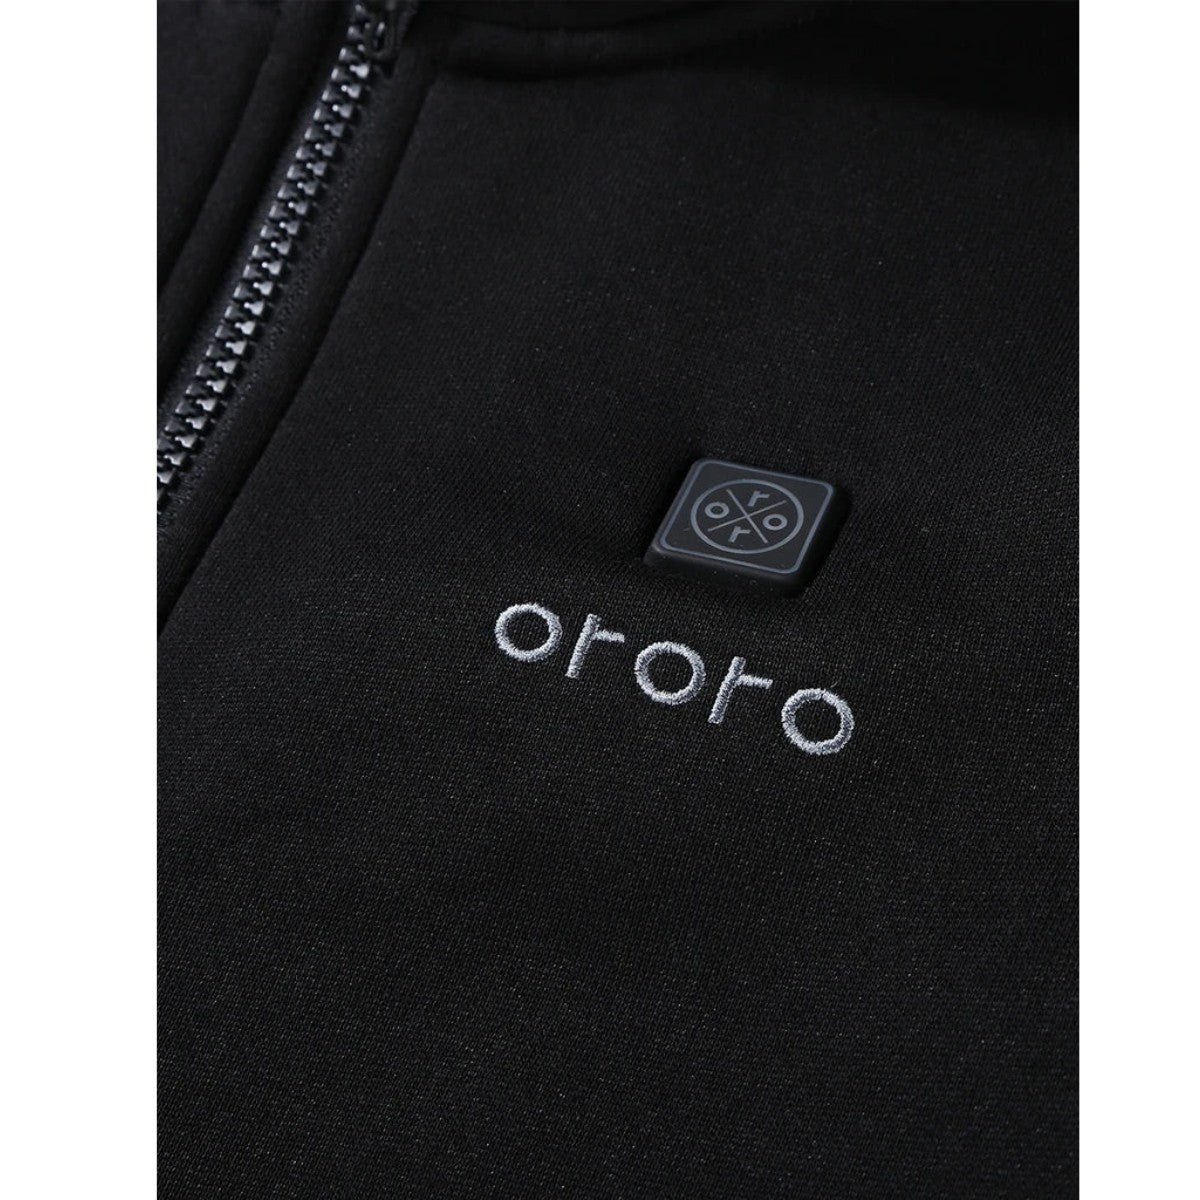 Ororo Mens Heated Full Zip Fleece Jacket - Black